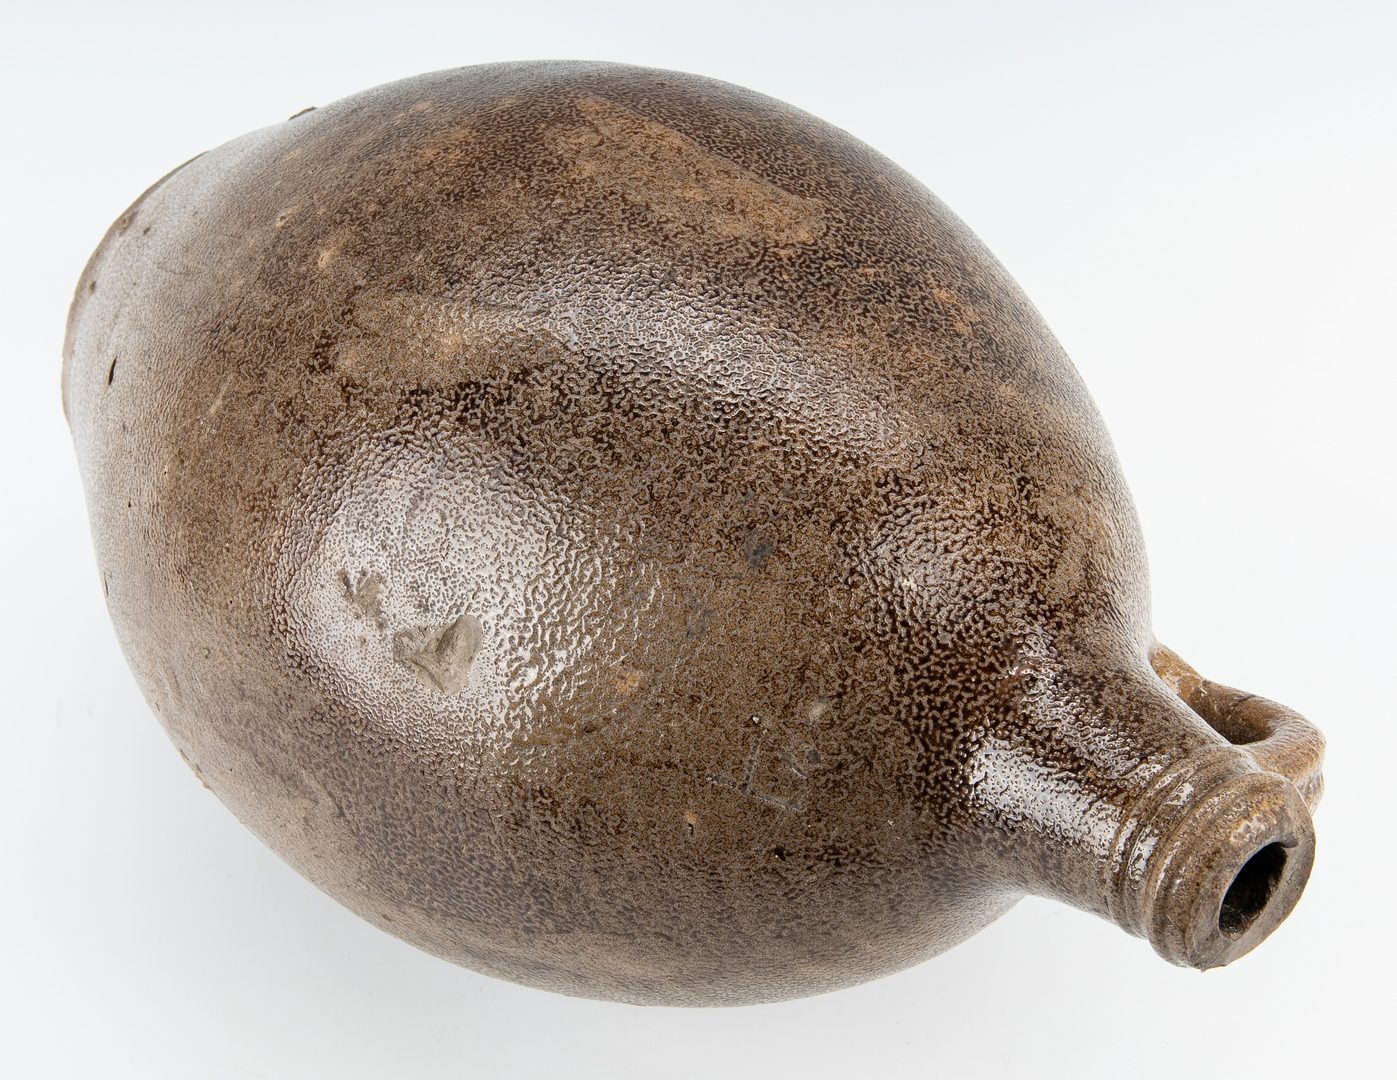 Lot 257: German Bellarmine Stoneware jug, 18th century